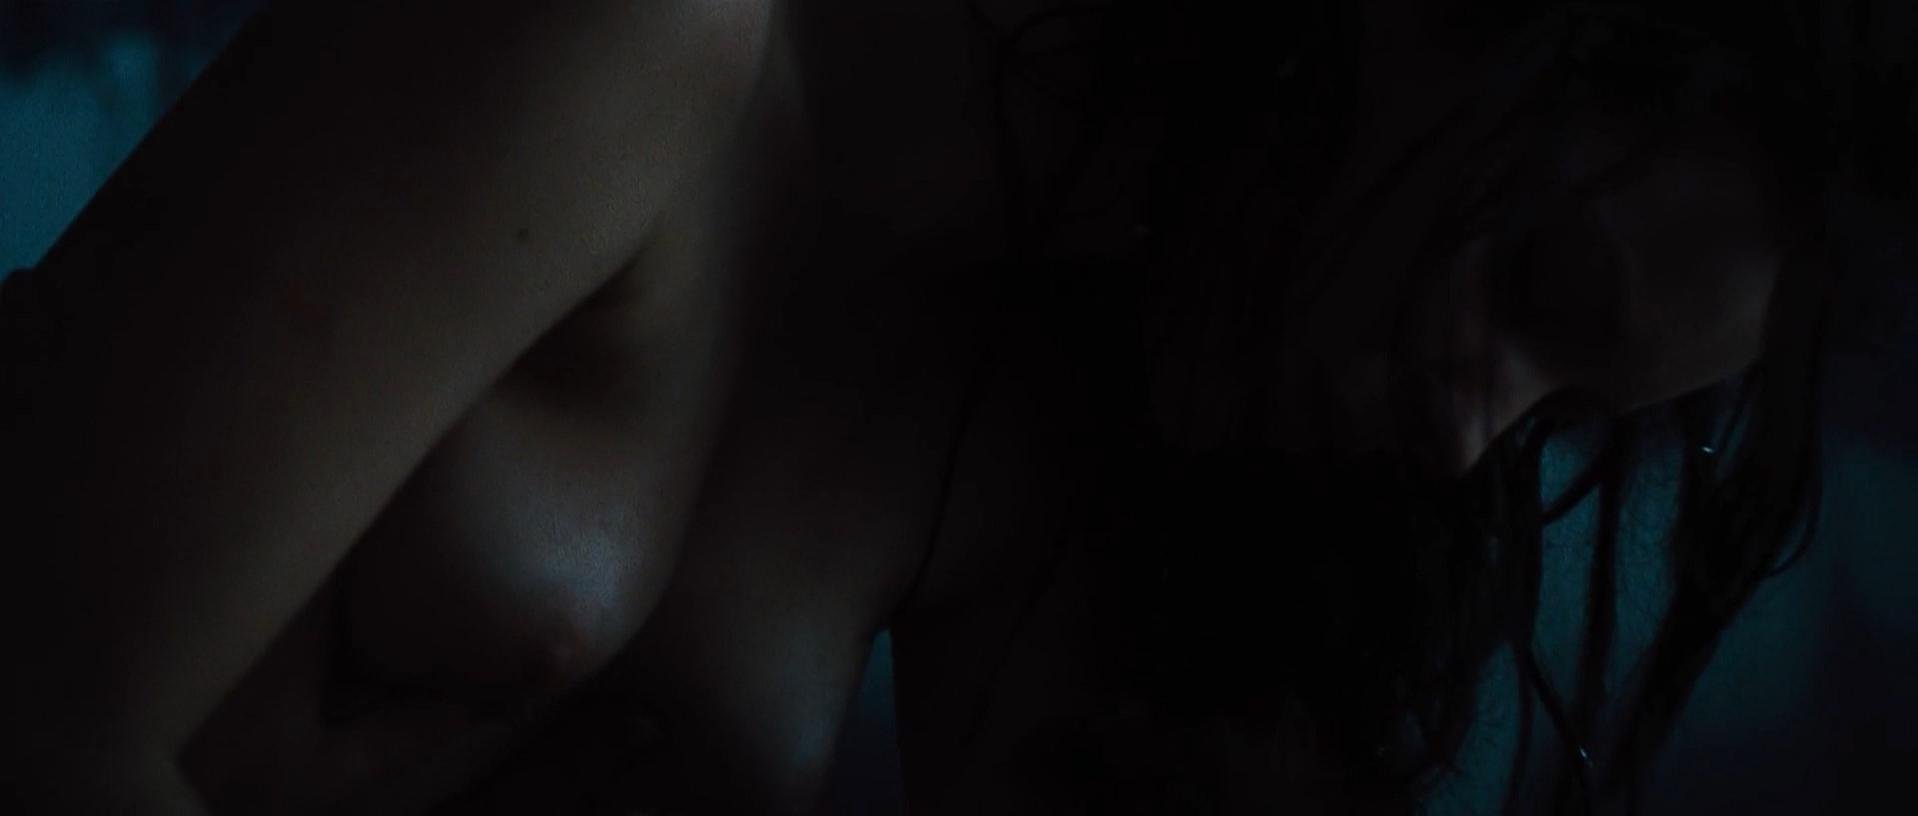 Sex Annette Bening Nude Grifters Scenes